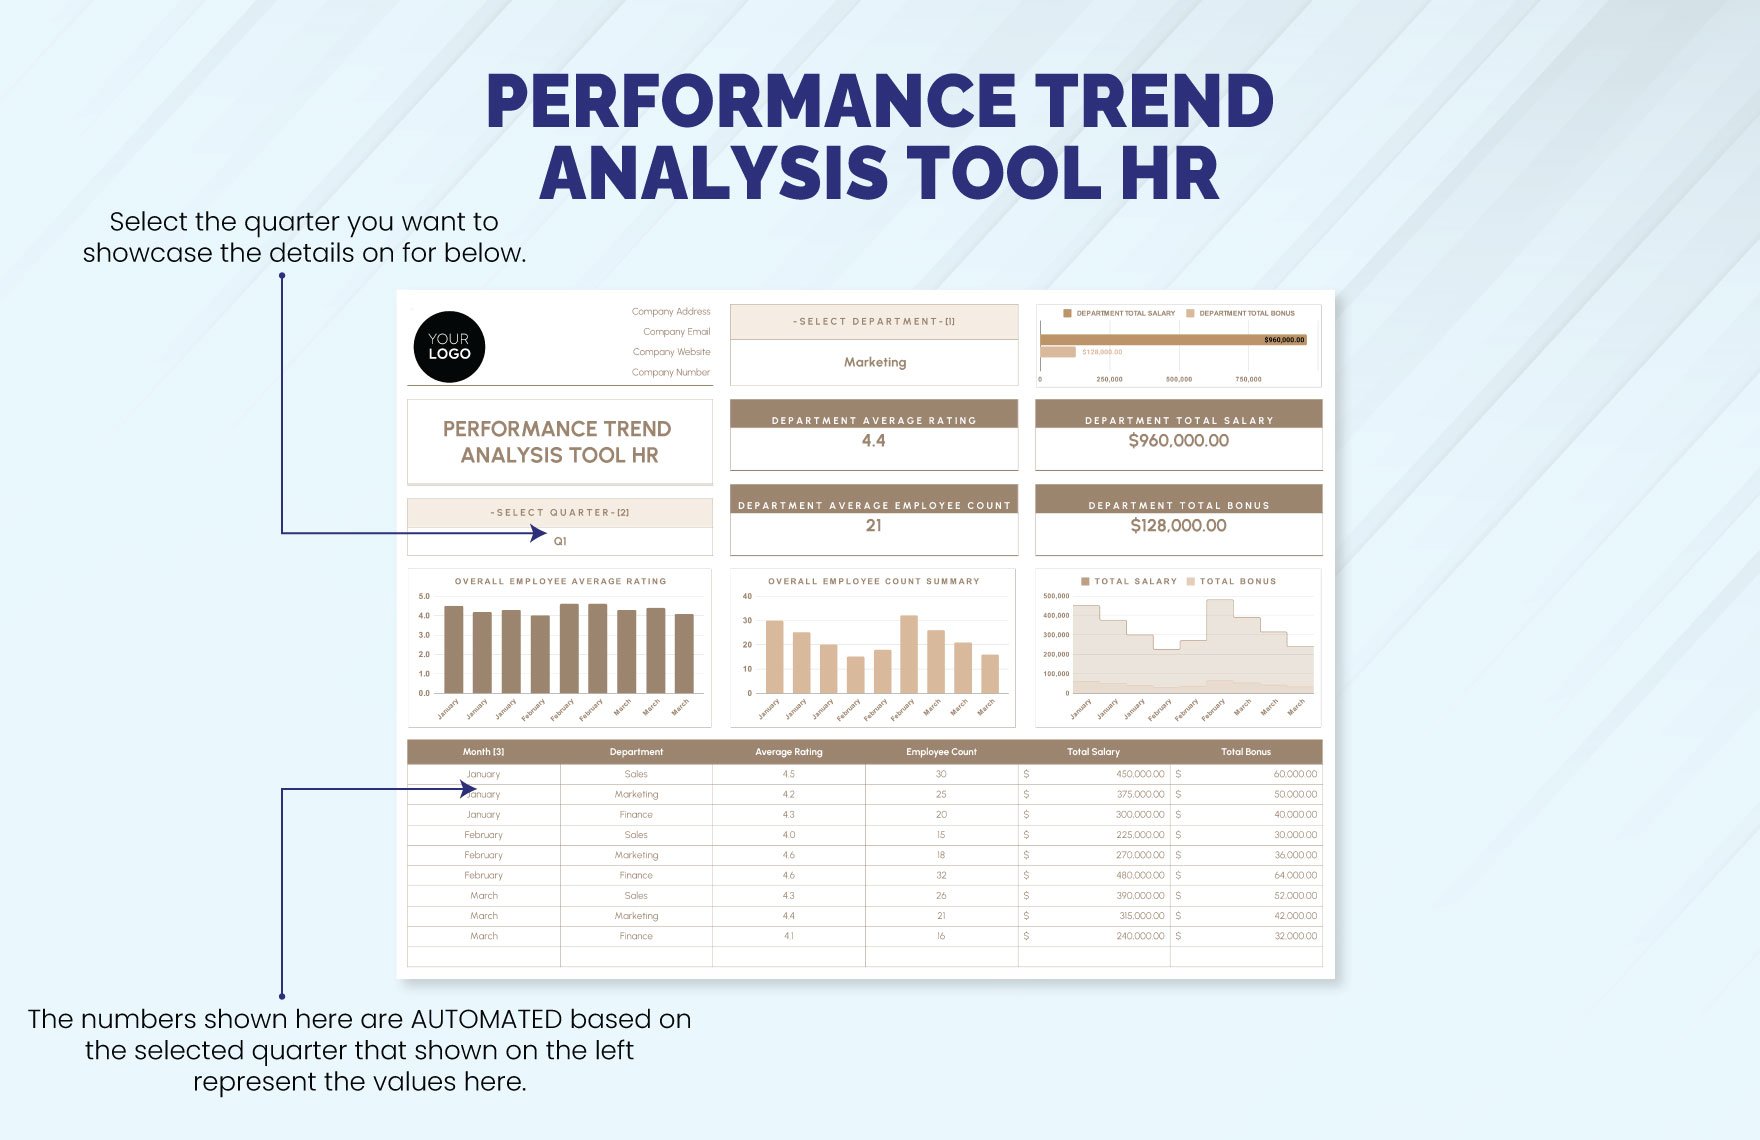 Performance Trend Analysis Tool HR Template